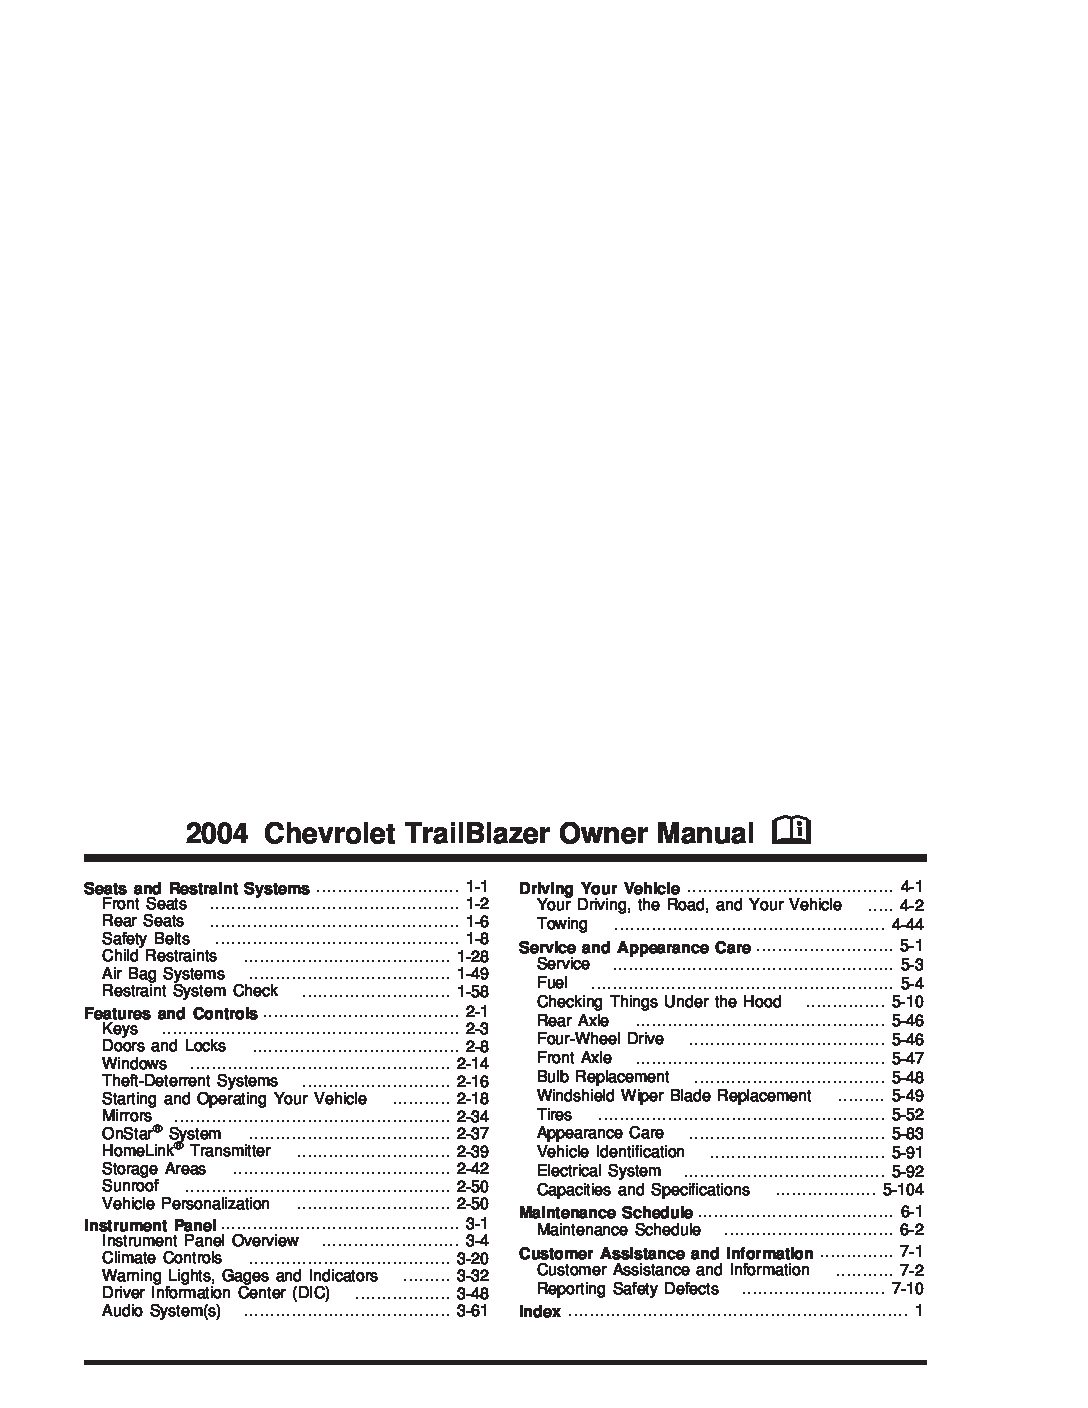 2004 Chevrolet Trailblazer Owner’s Manual Image